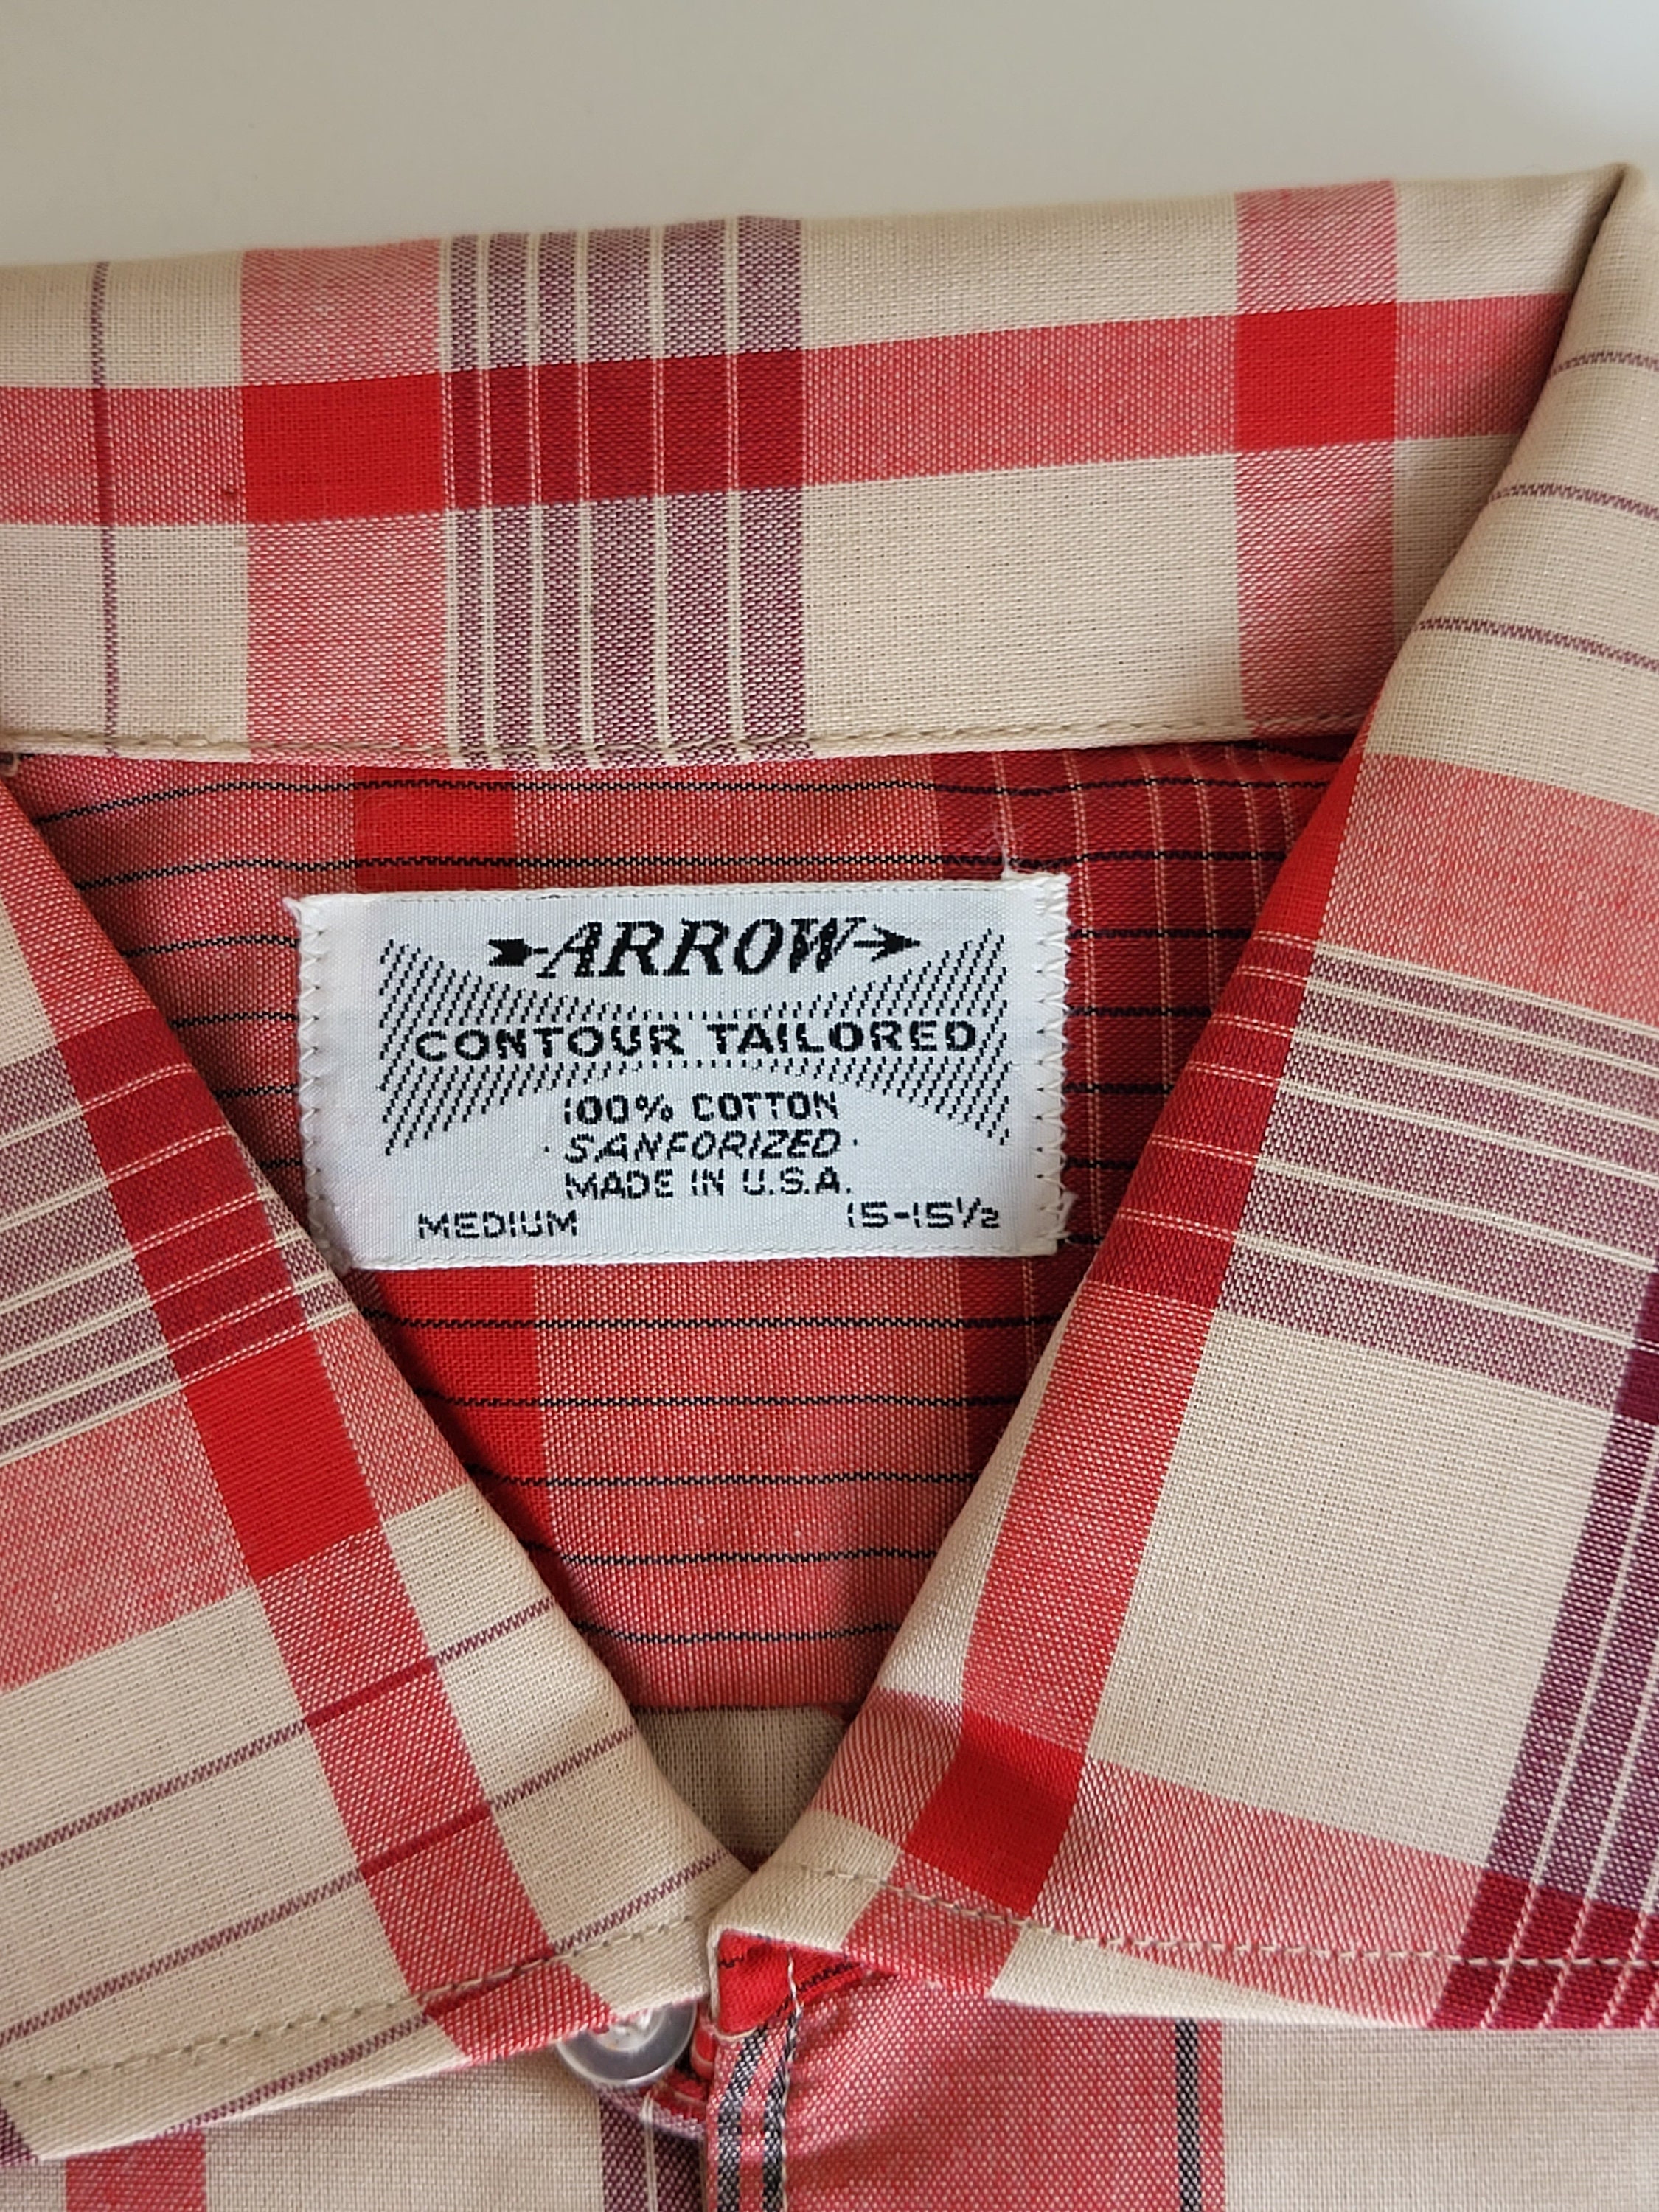 Vintage Arrow Contour Tailored Red & Tan Plaid Shirt M/15 15 1/2 Vintage  Plaid Shirt Retro Plaid Shirt 100% Sanforized Cotton Never Worn 